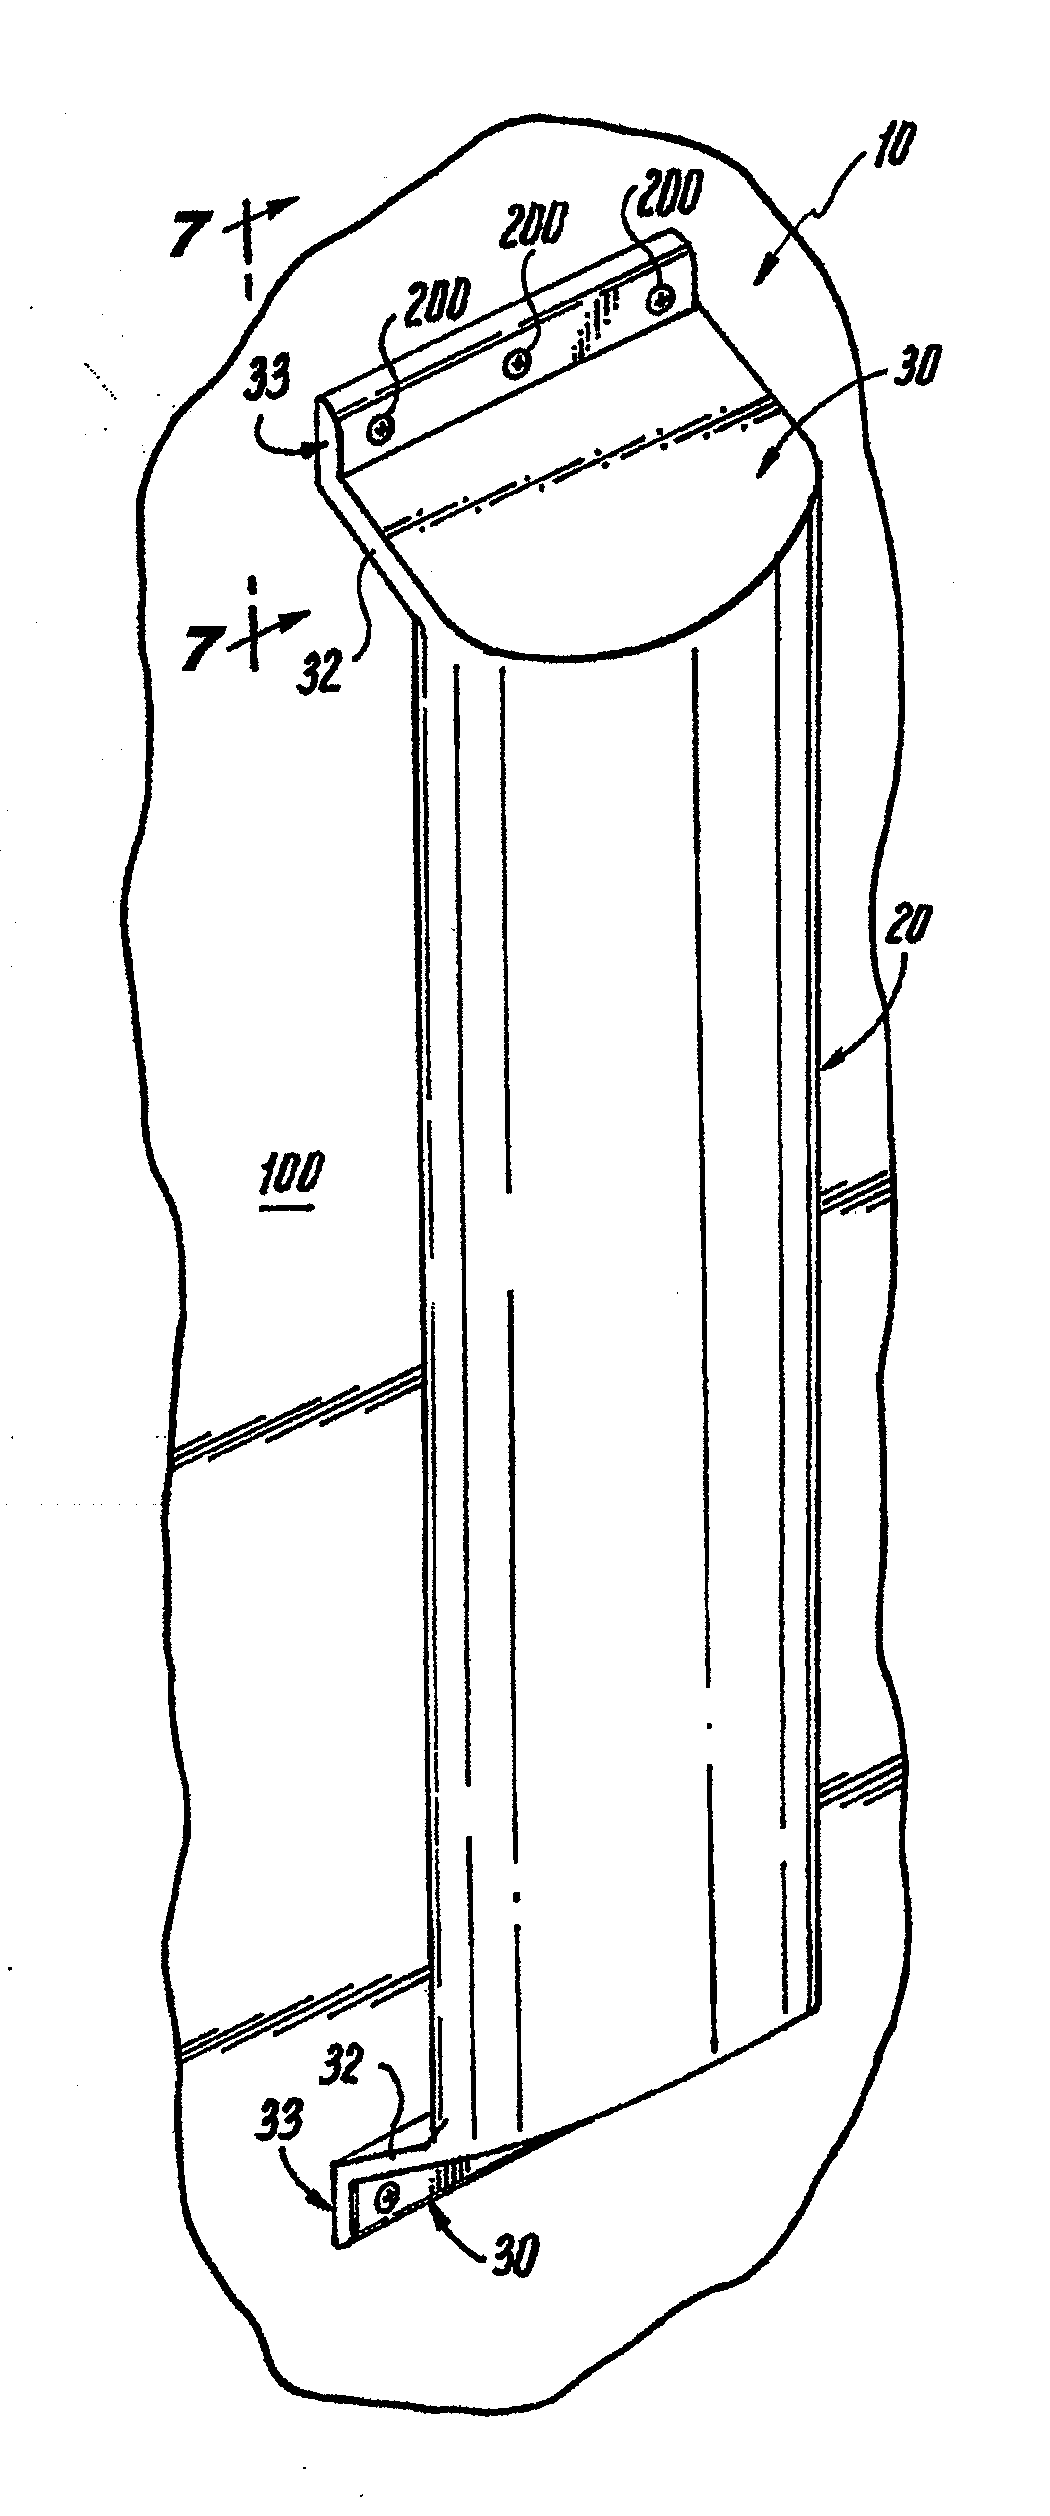 Ligature-resistant vertical grab bar